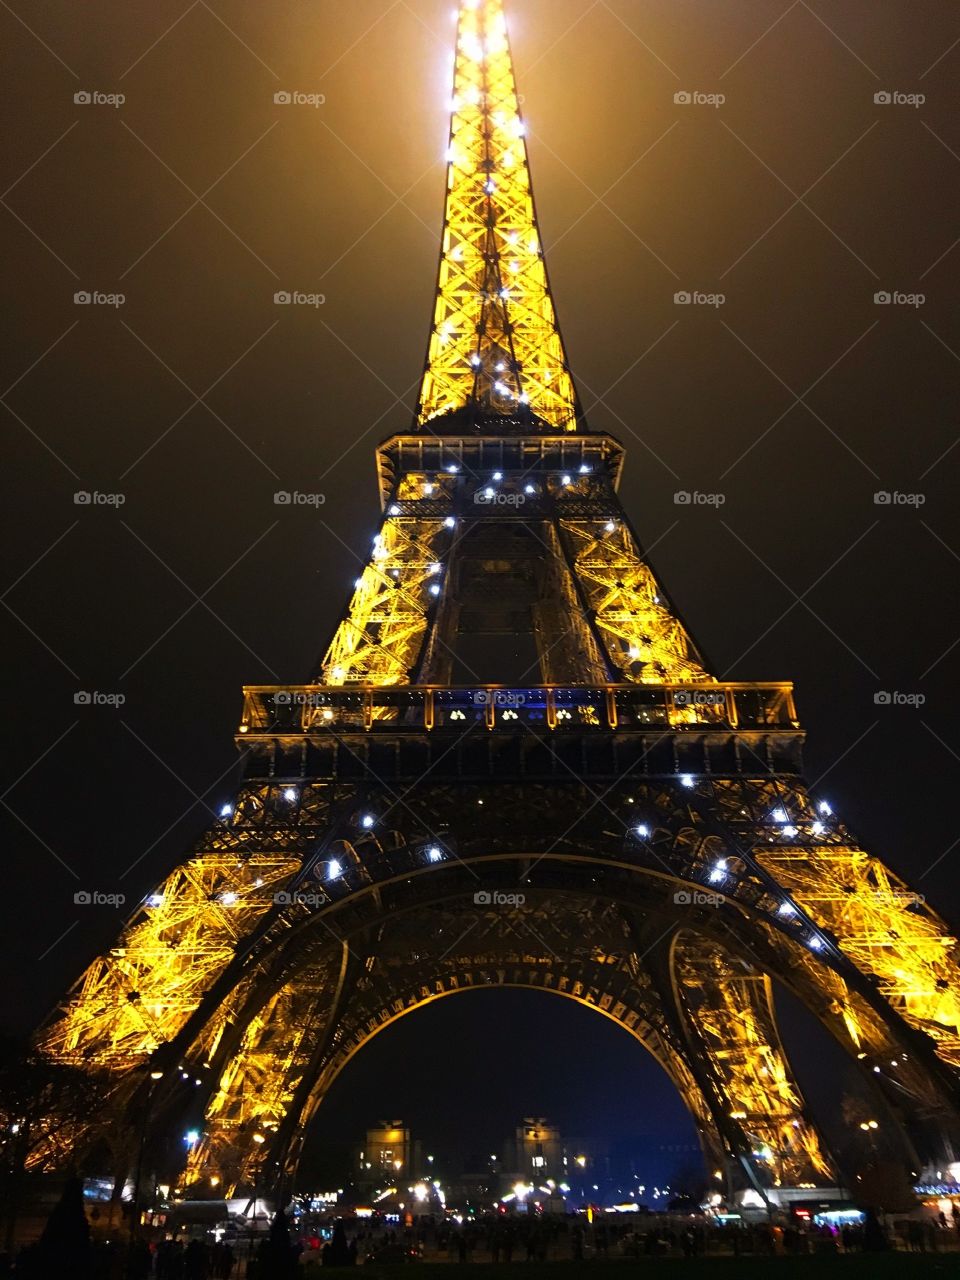 Eiffel Tower at night.